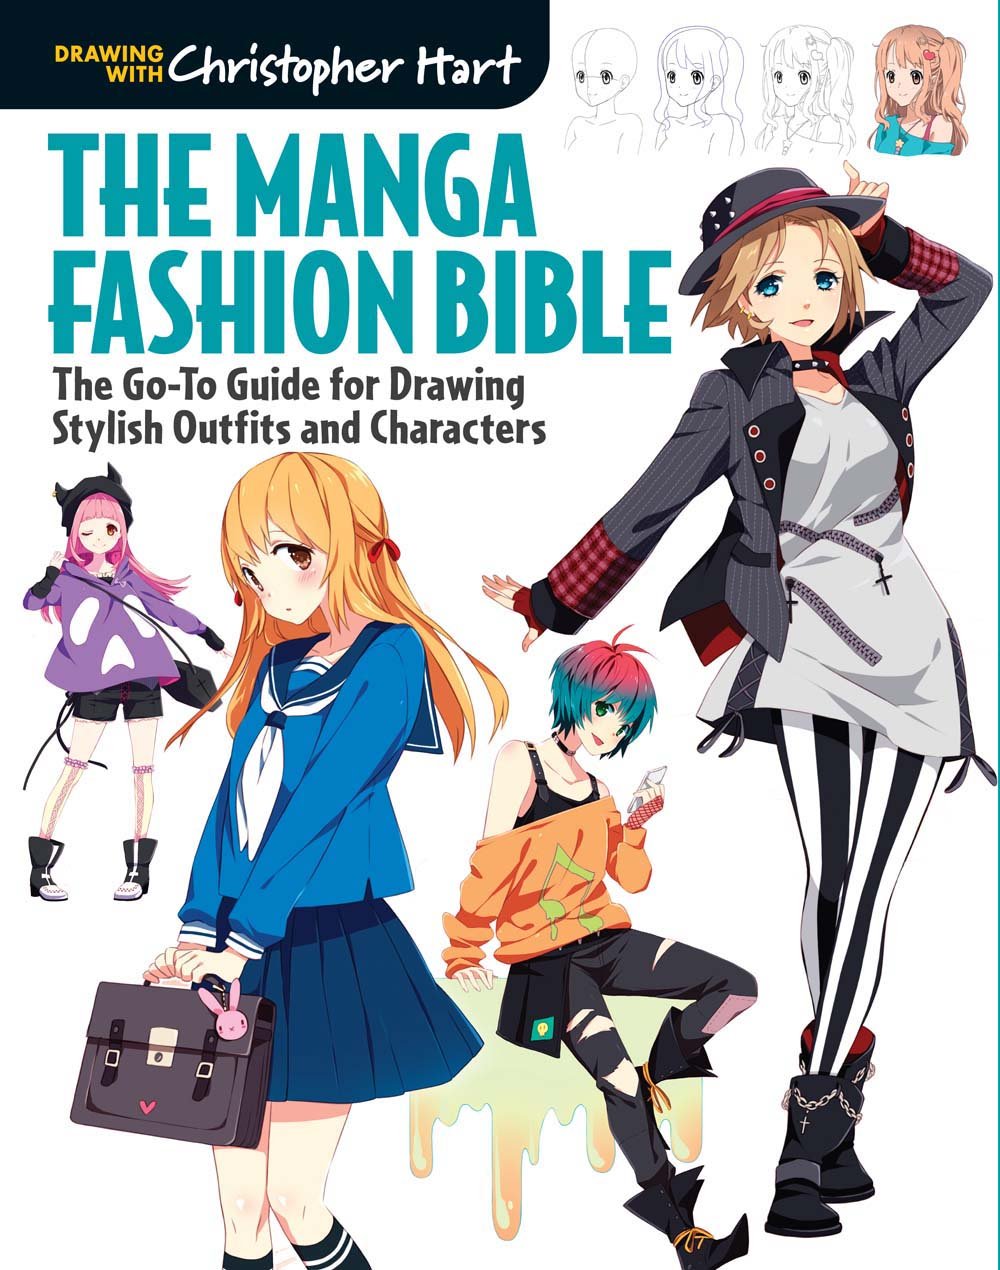 Christopher Hart Books How to draw manga, figures, animals & cartoons